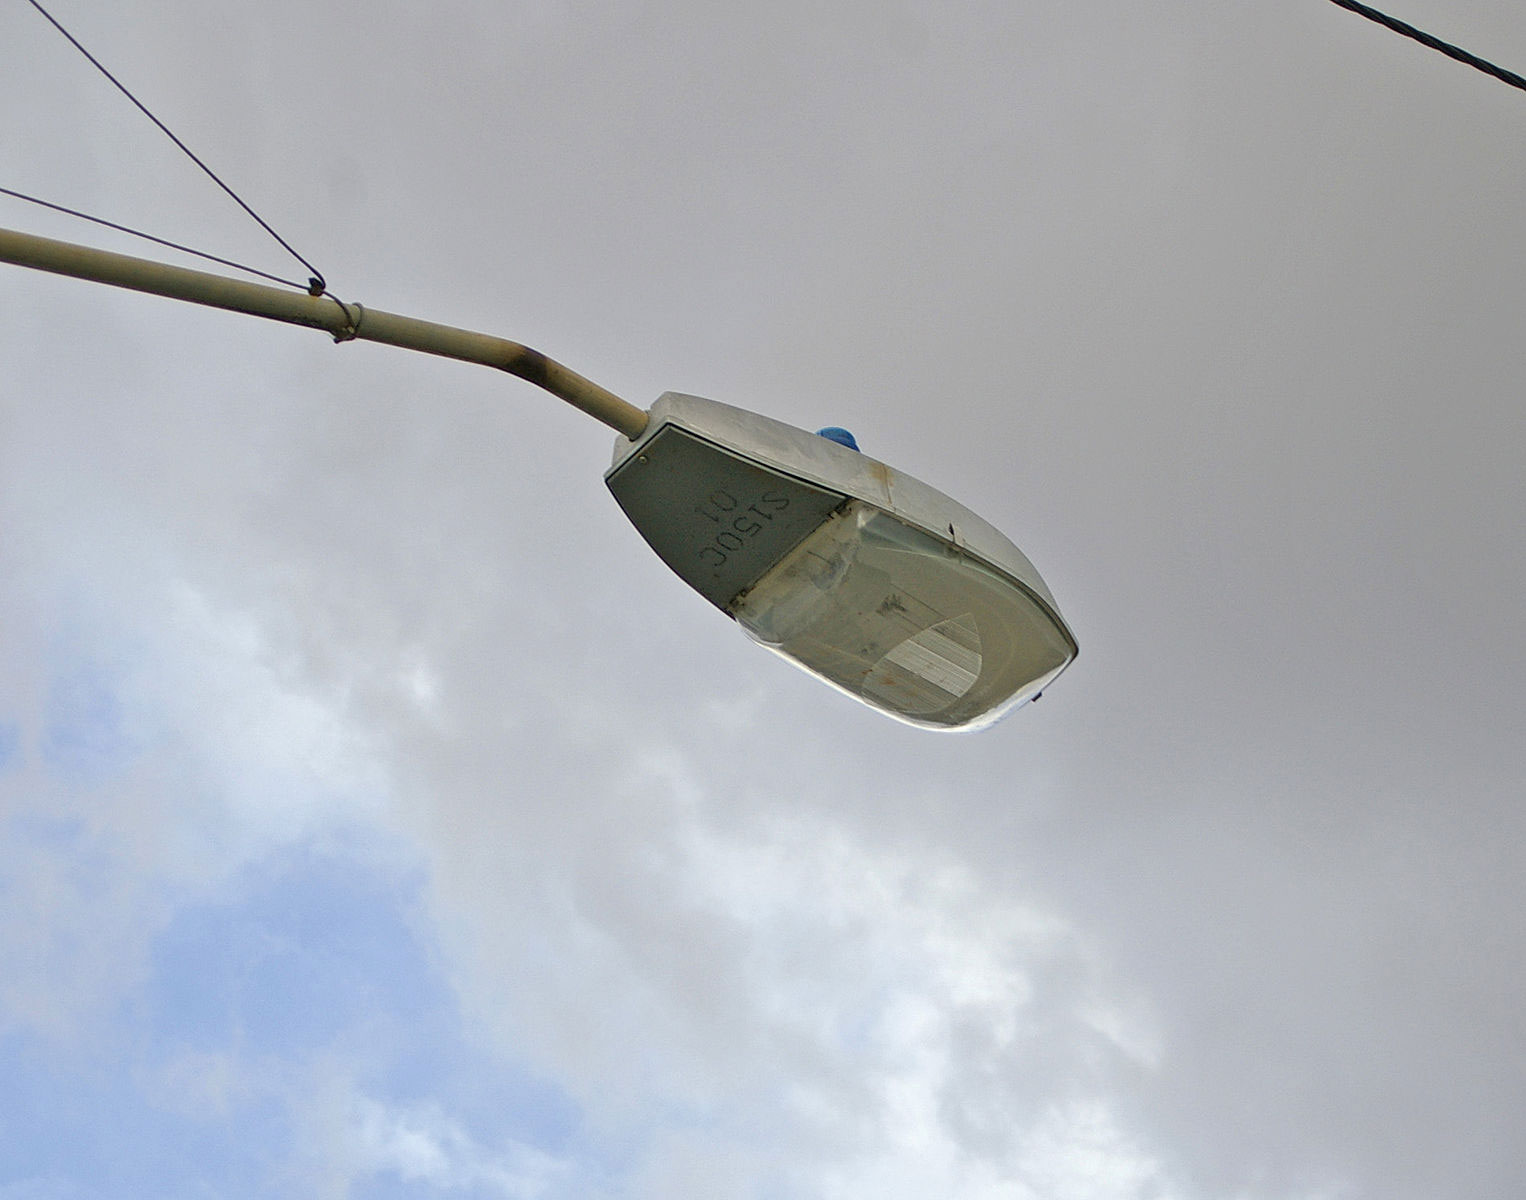 A high-pressure sodium vapor street lamp